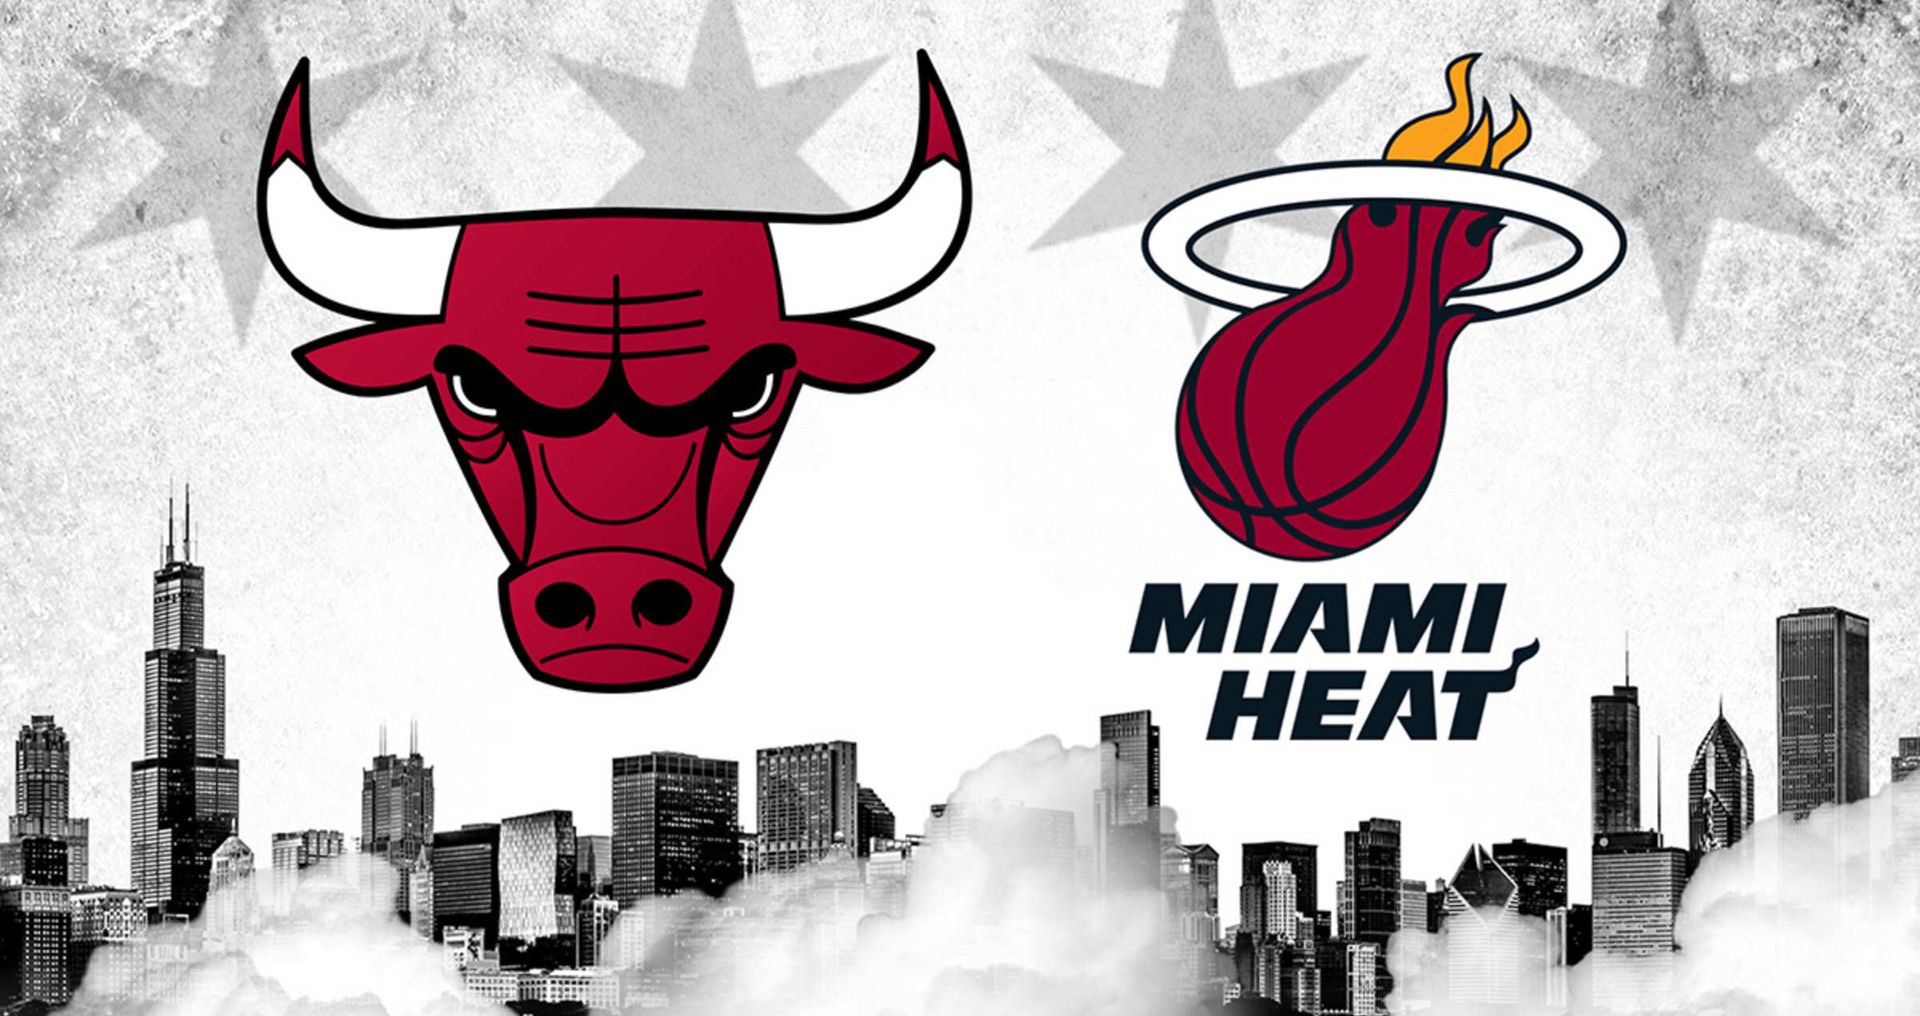 Chicago Bulls Vs. Miami Heat (Amazing Sears- Behind Heat Bench)